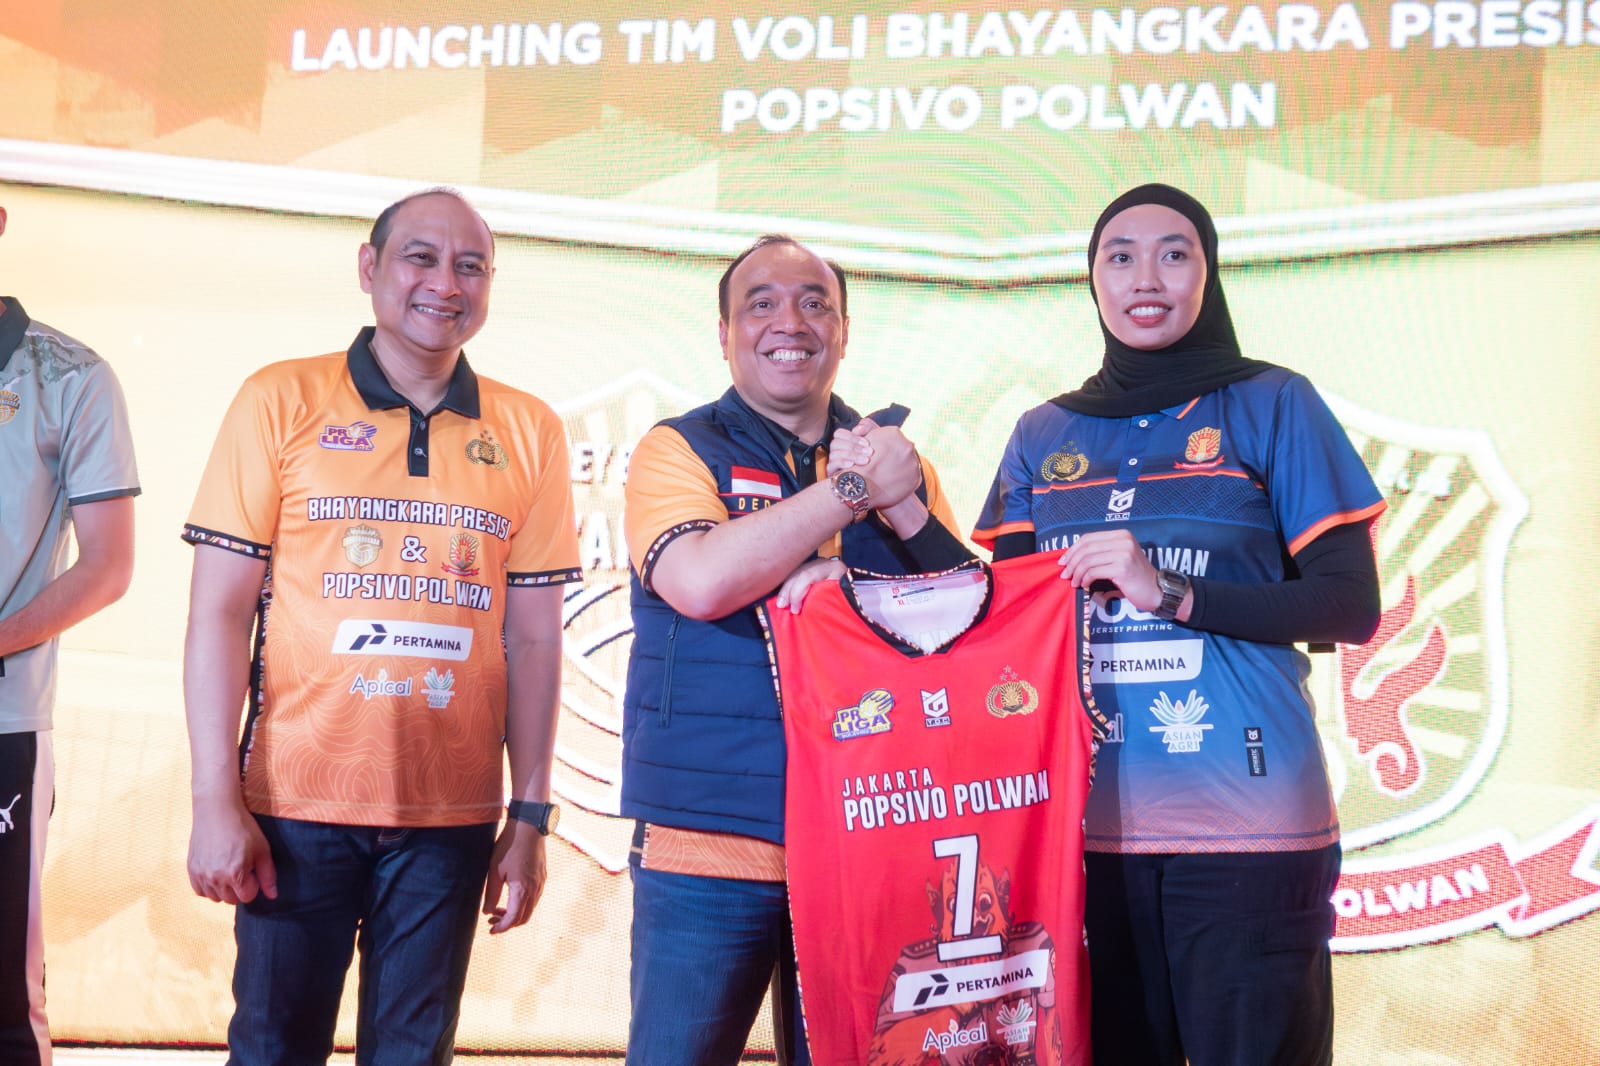 As SDM Kapolri bersama dengan Kapolda Kalimantan Barat Launching Tim Bola Voli Jakarta Bhayangkara Presisi dan POPSIVO Polwan